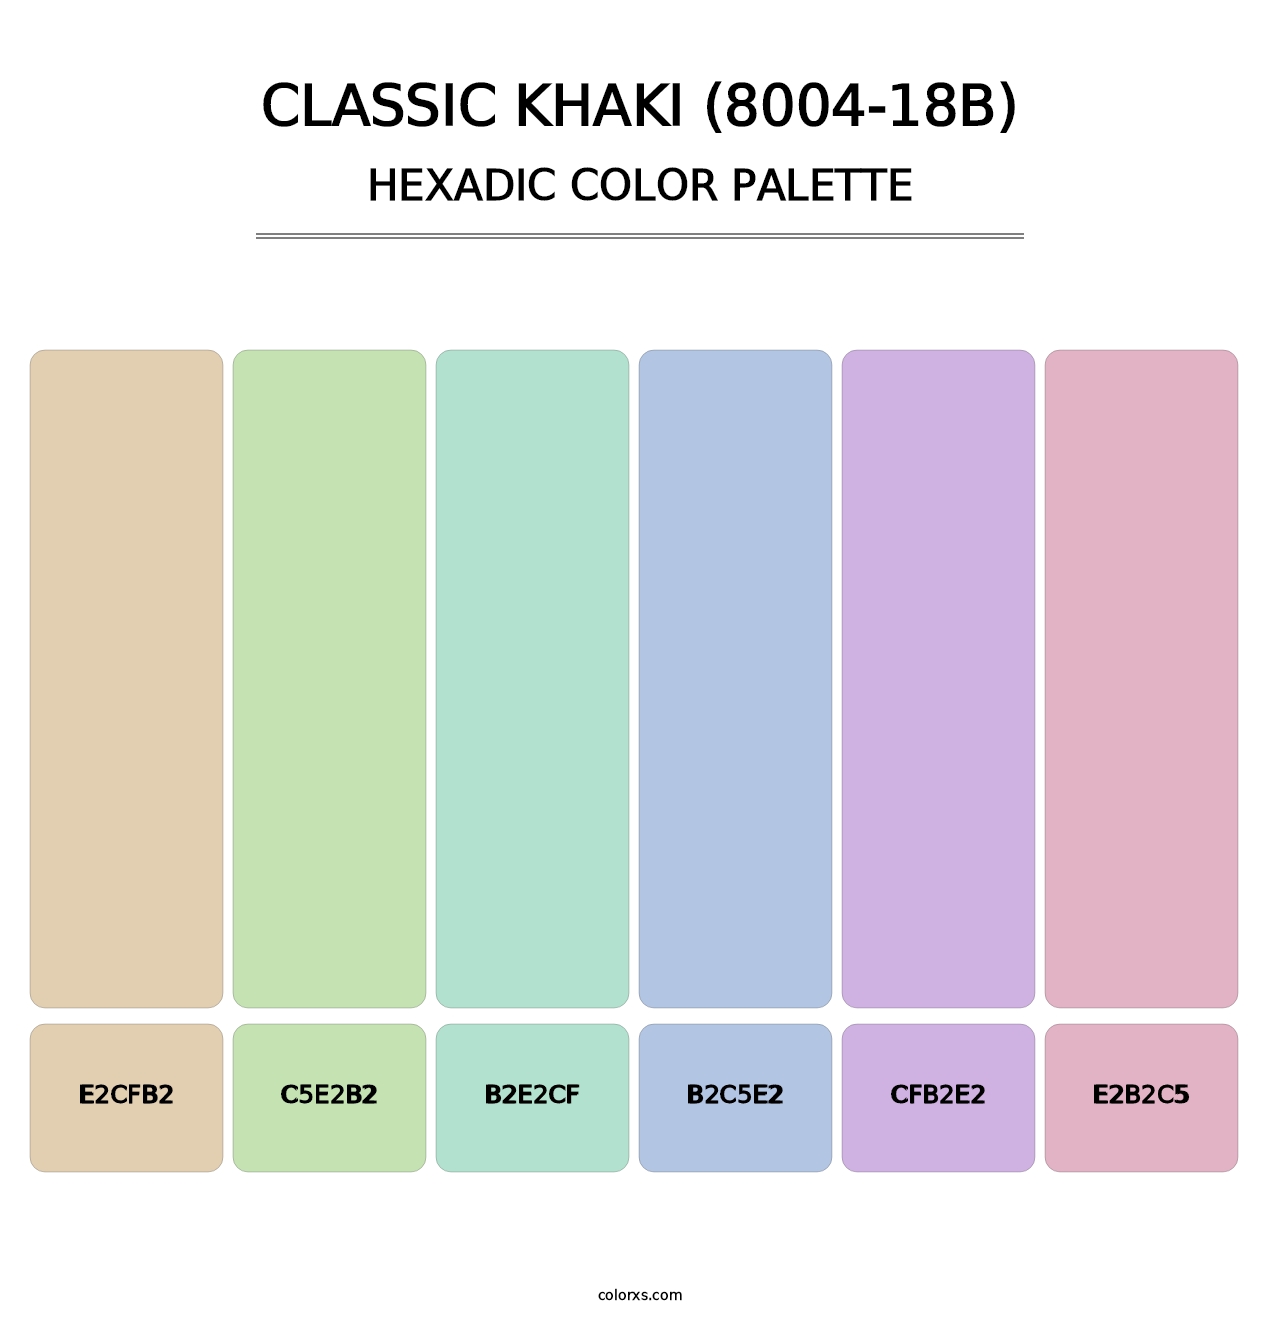 Classic Khaki (8004-18B) - Hexadic Color Palette